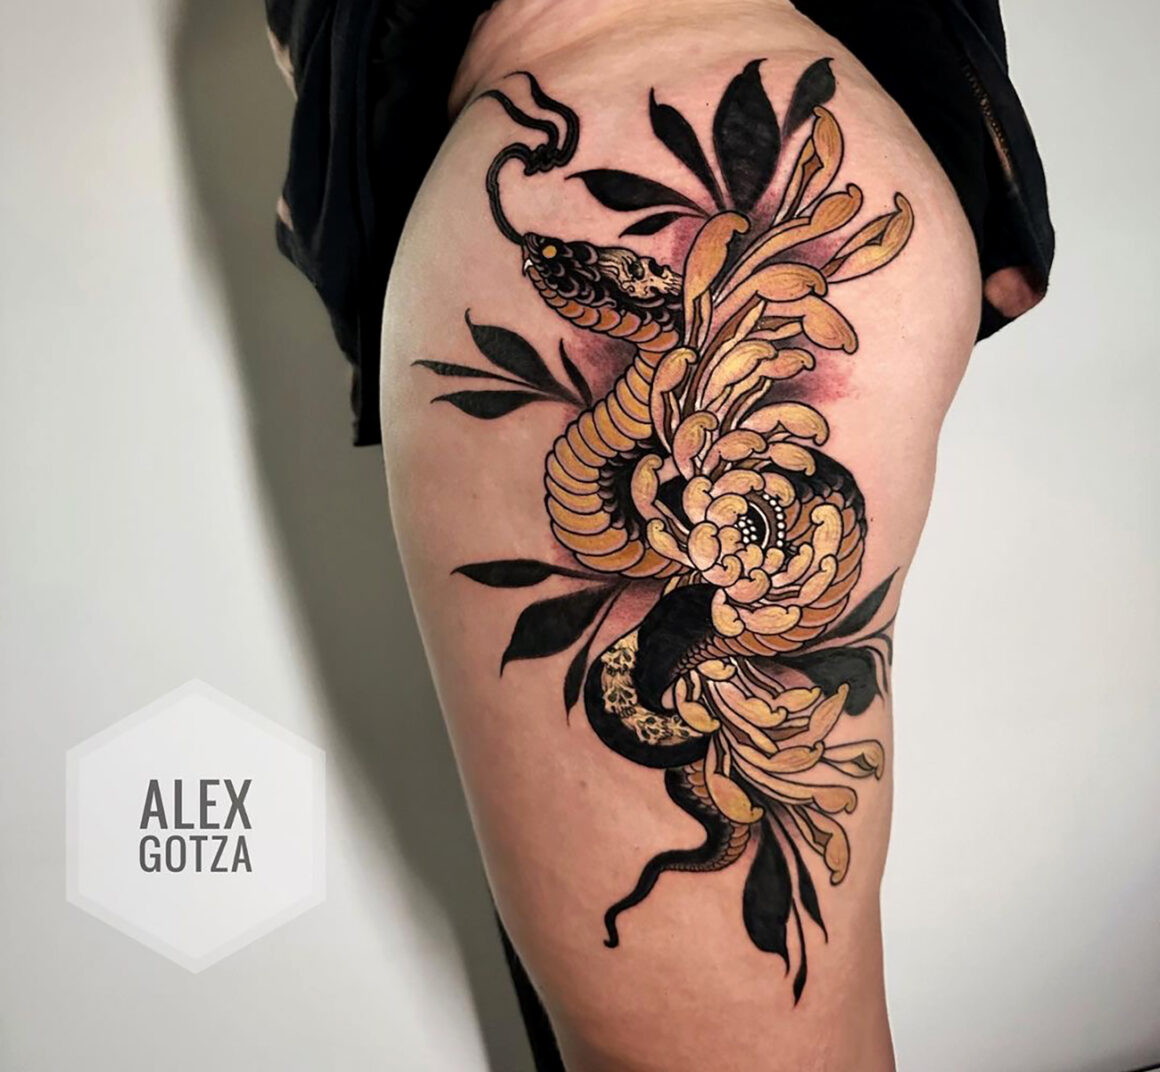 Tattoo by Alex Gotza, @alexgotza